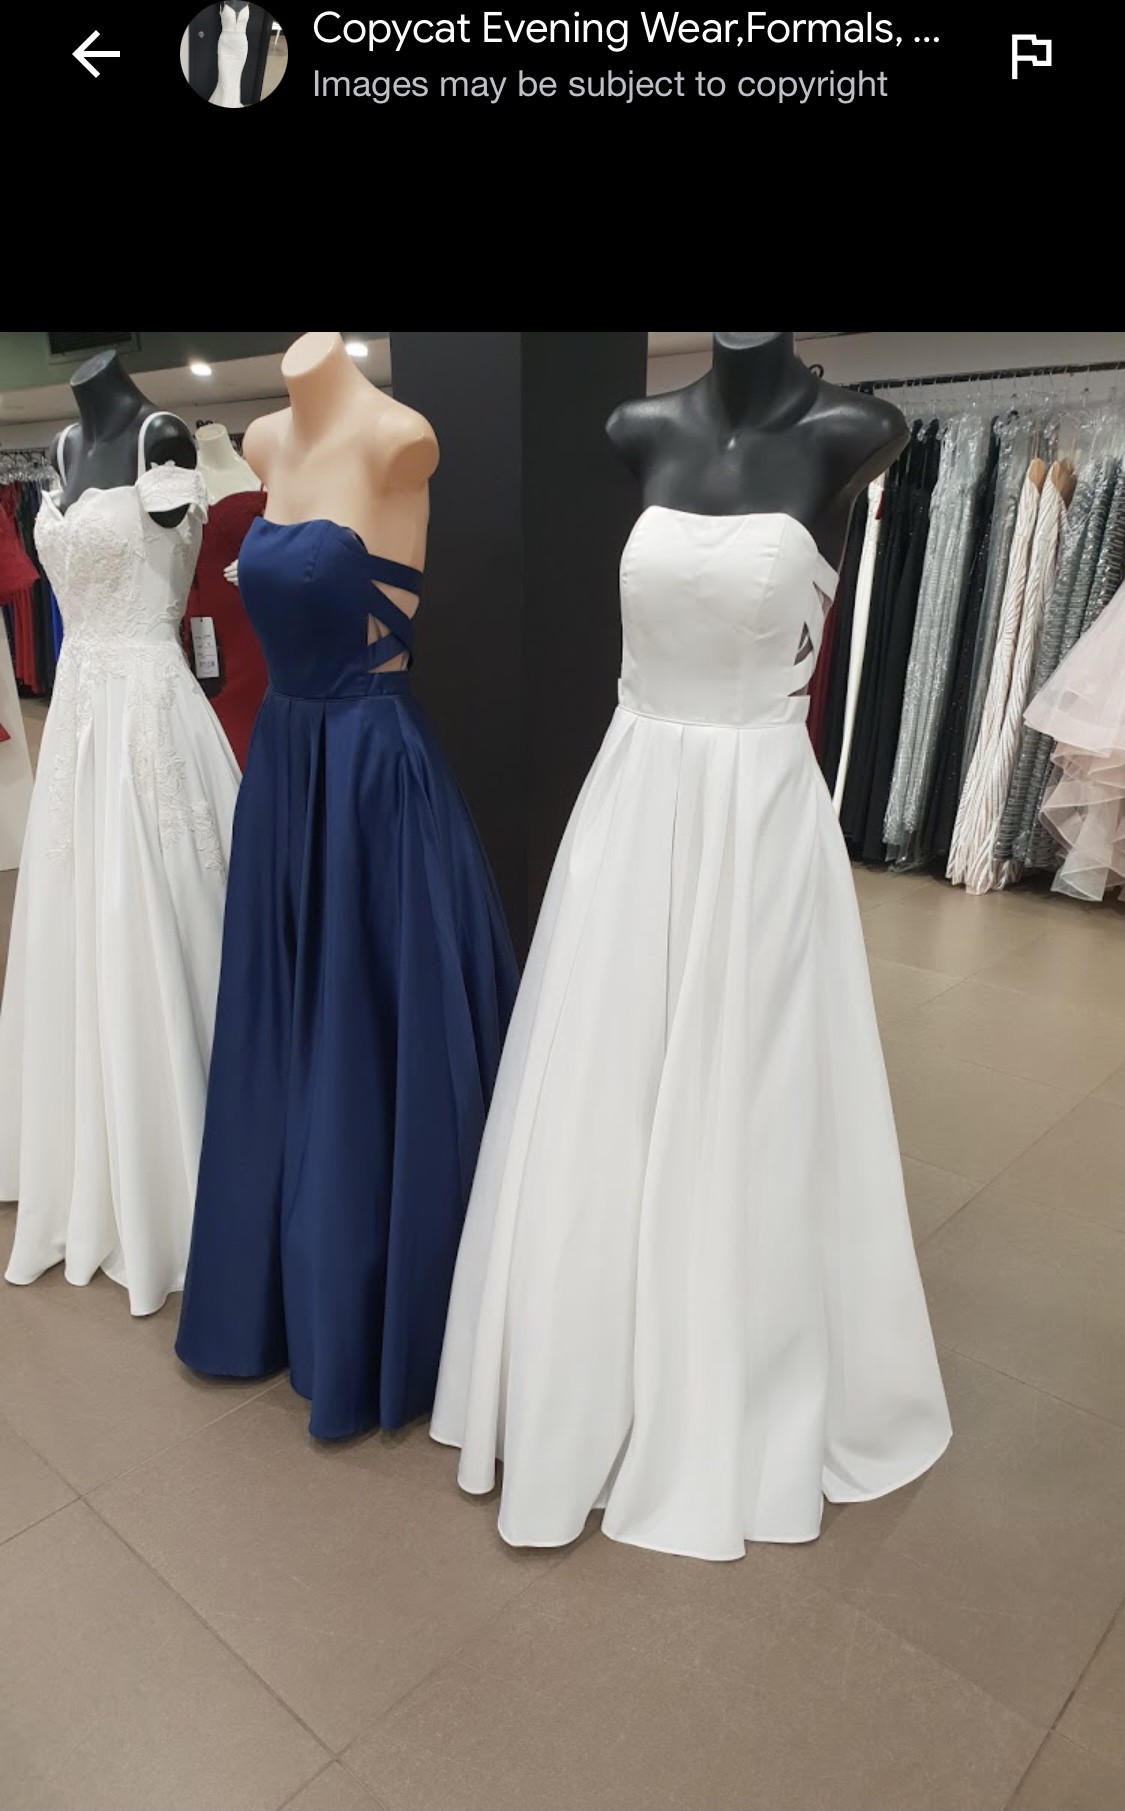 Copycat Formal Dresses Factory Sale, UP ...